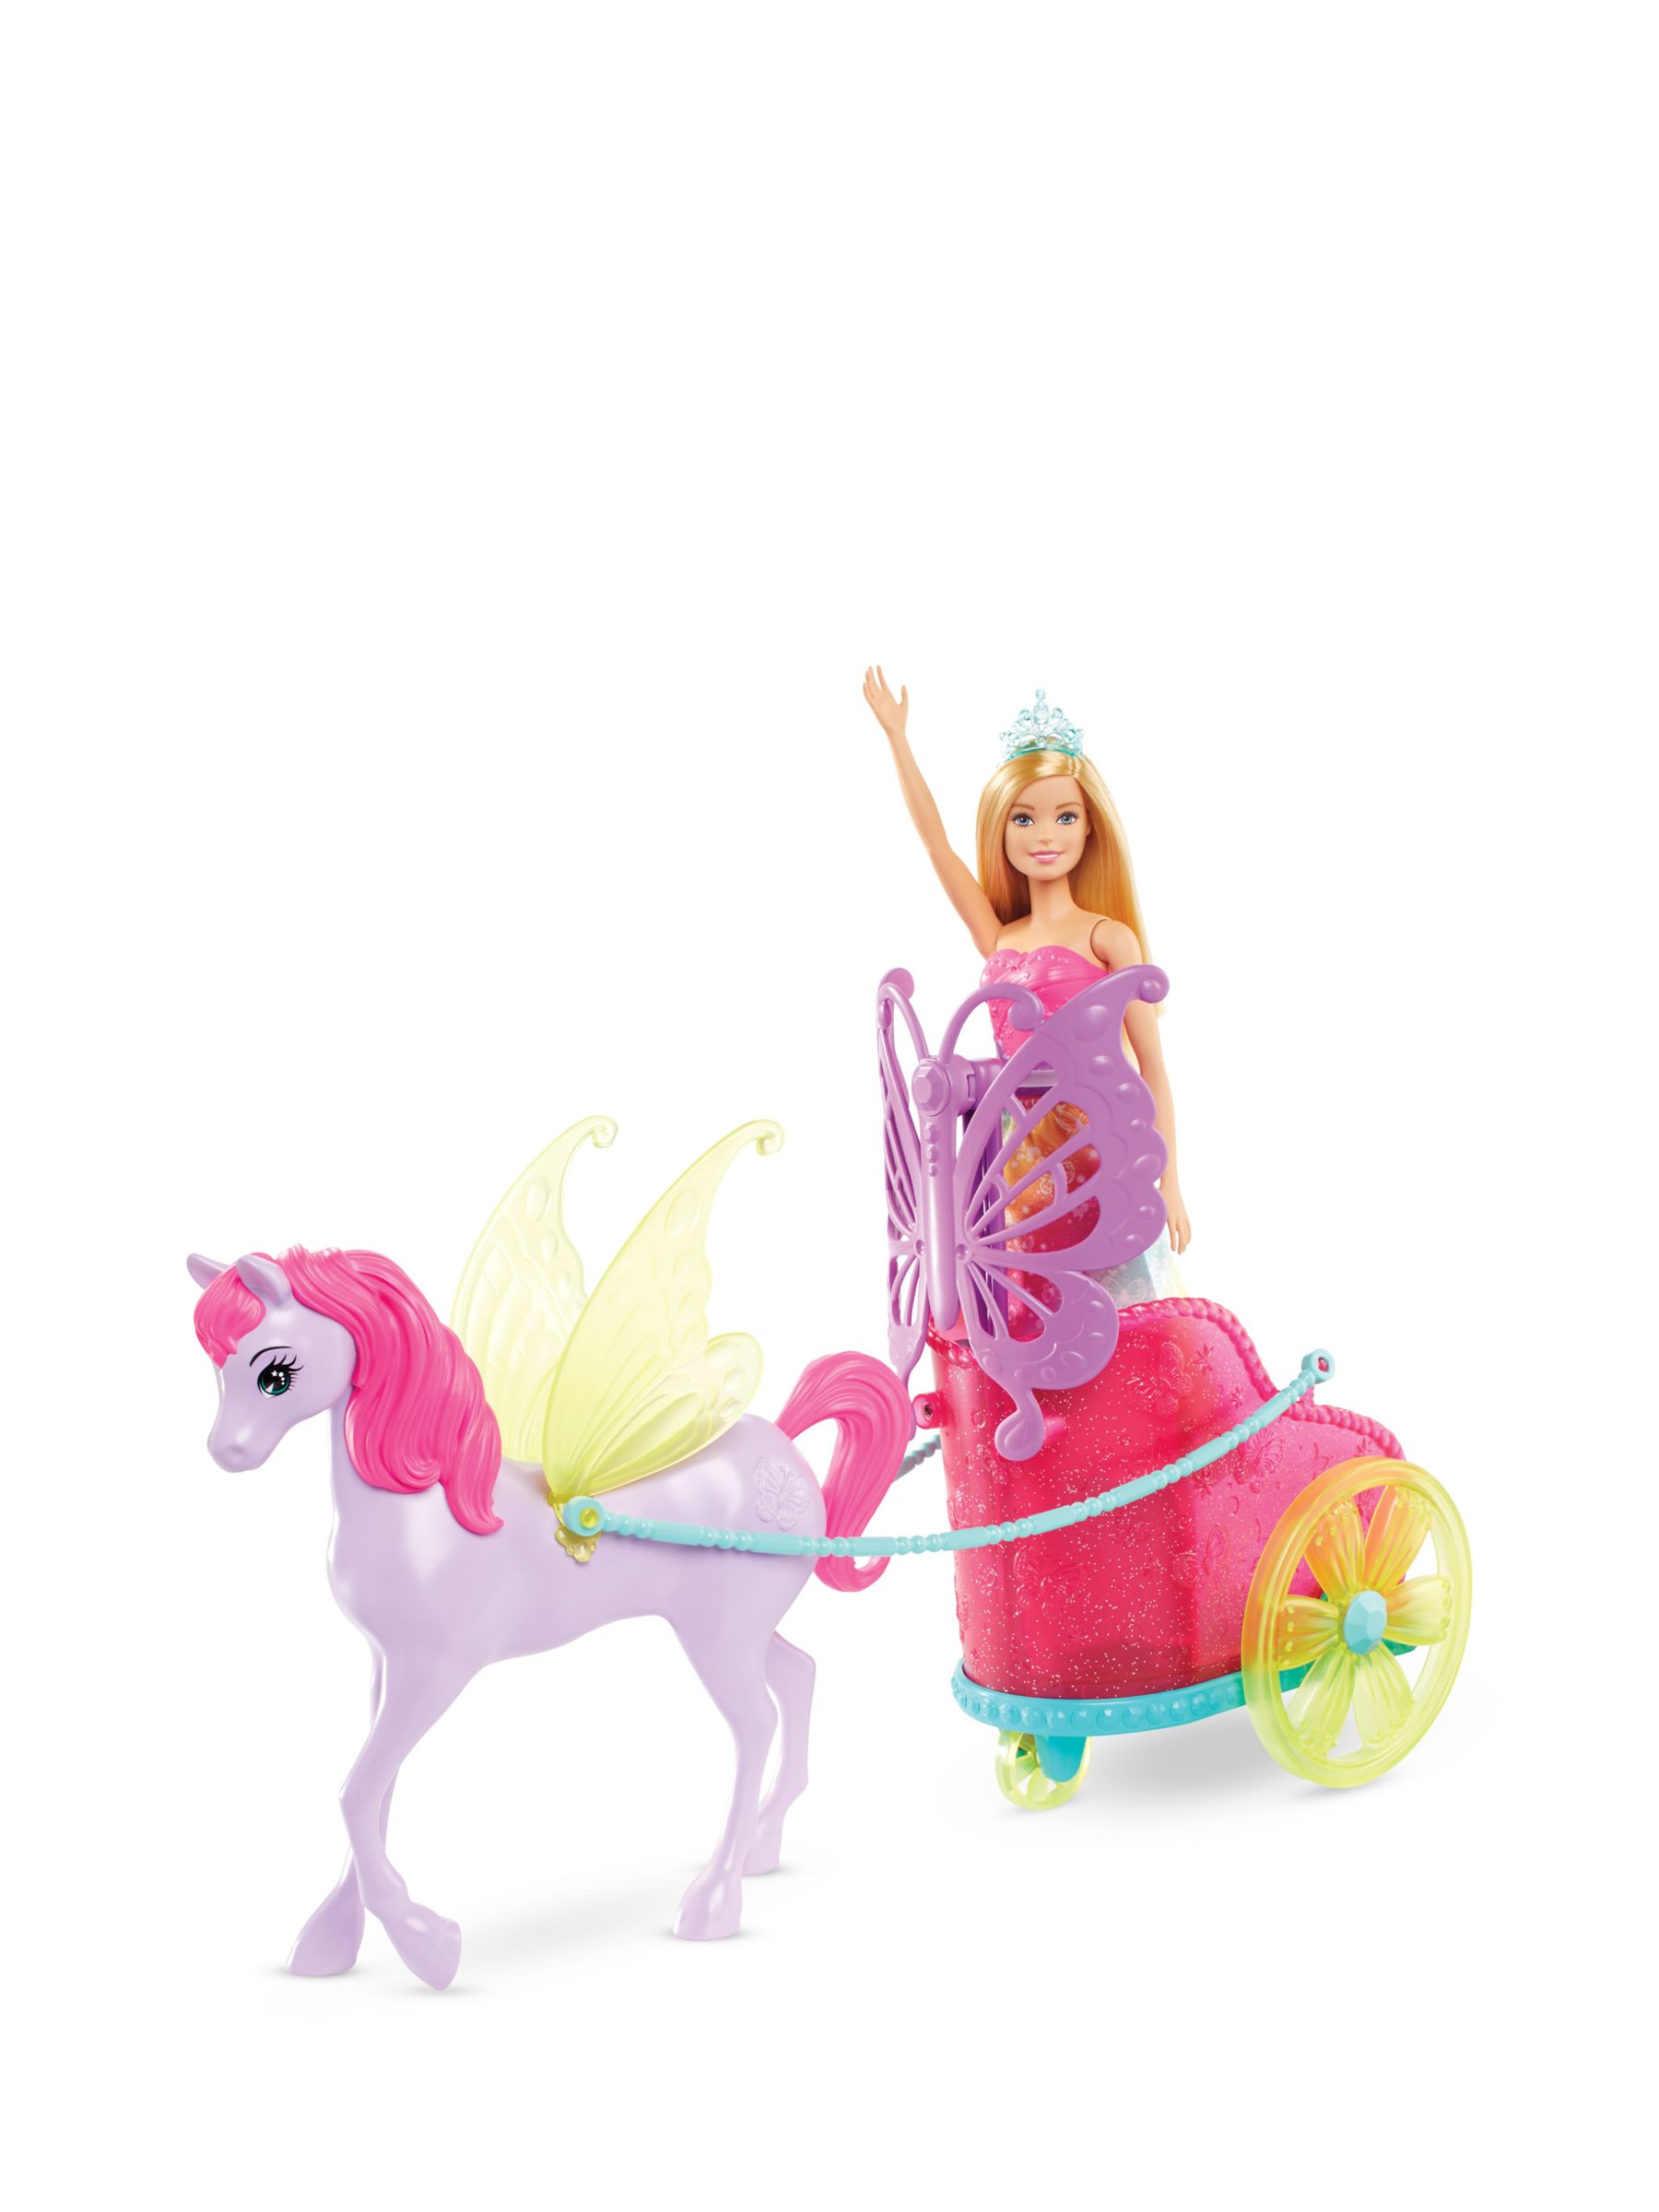 barbie dreamtopia carriage and princesses